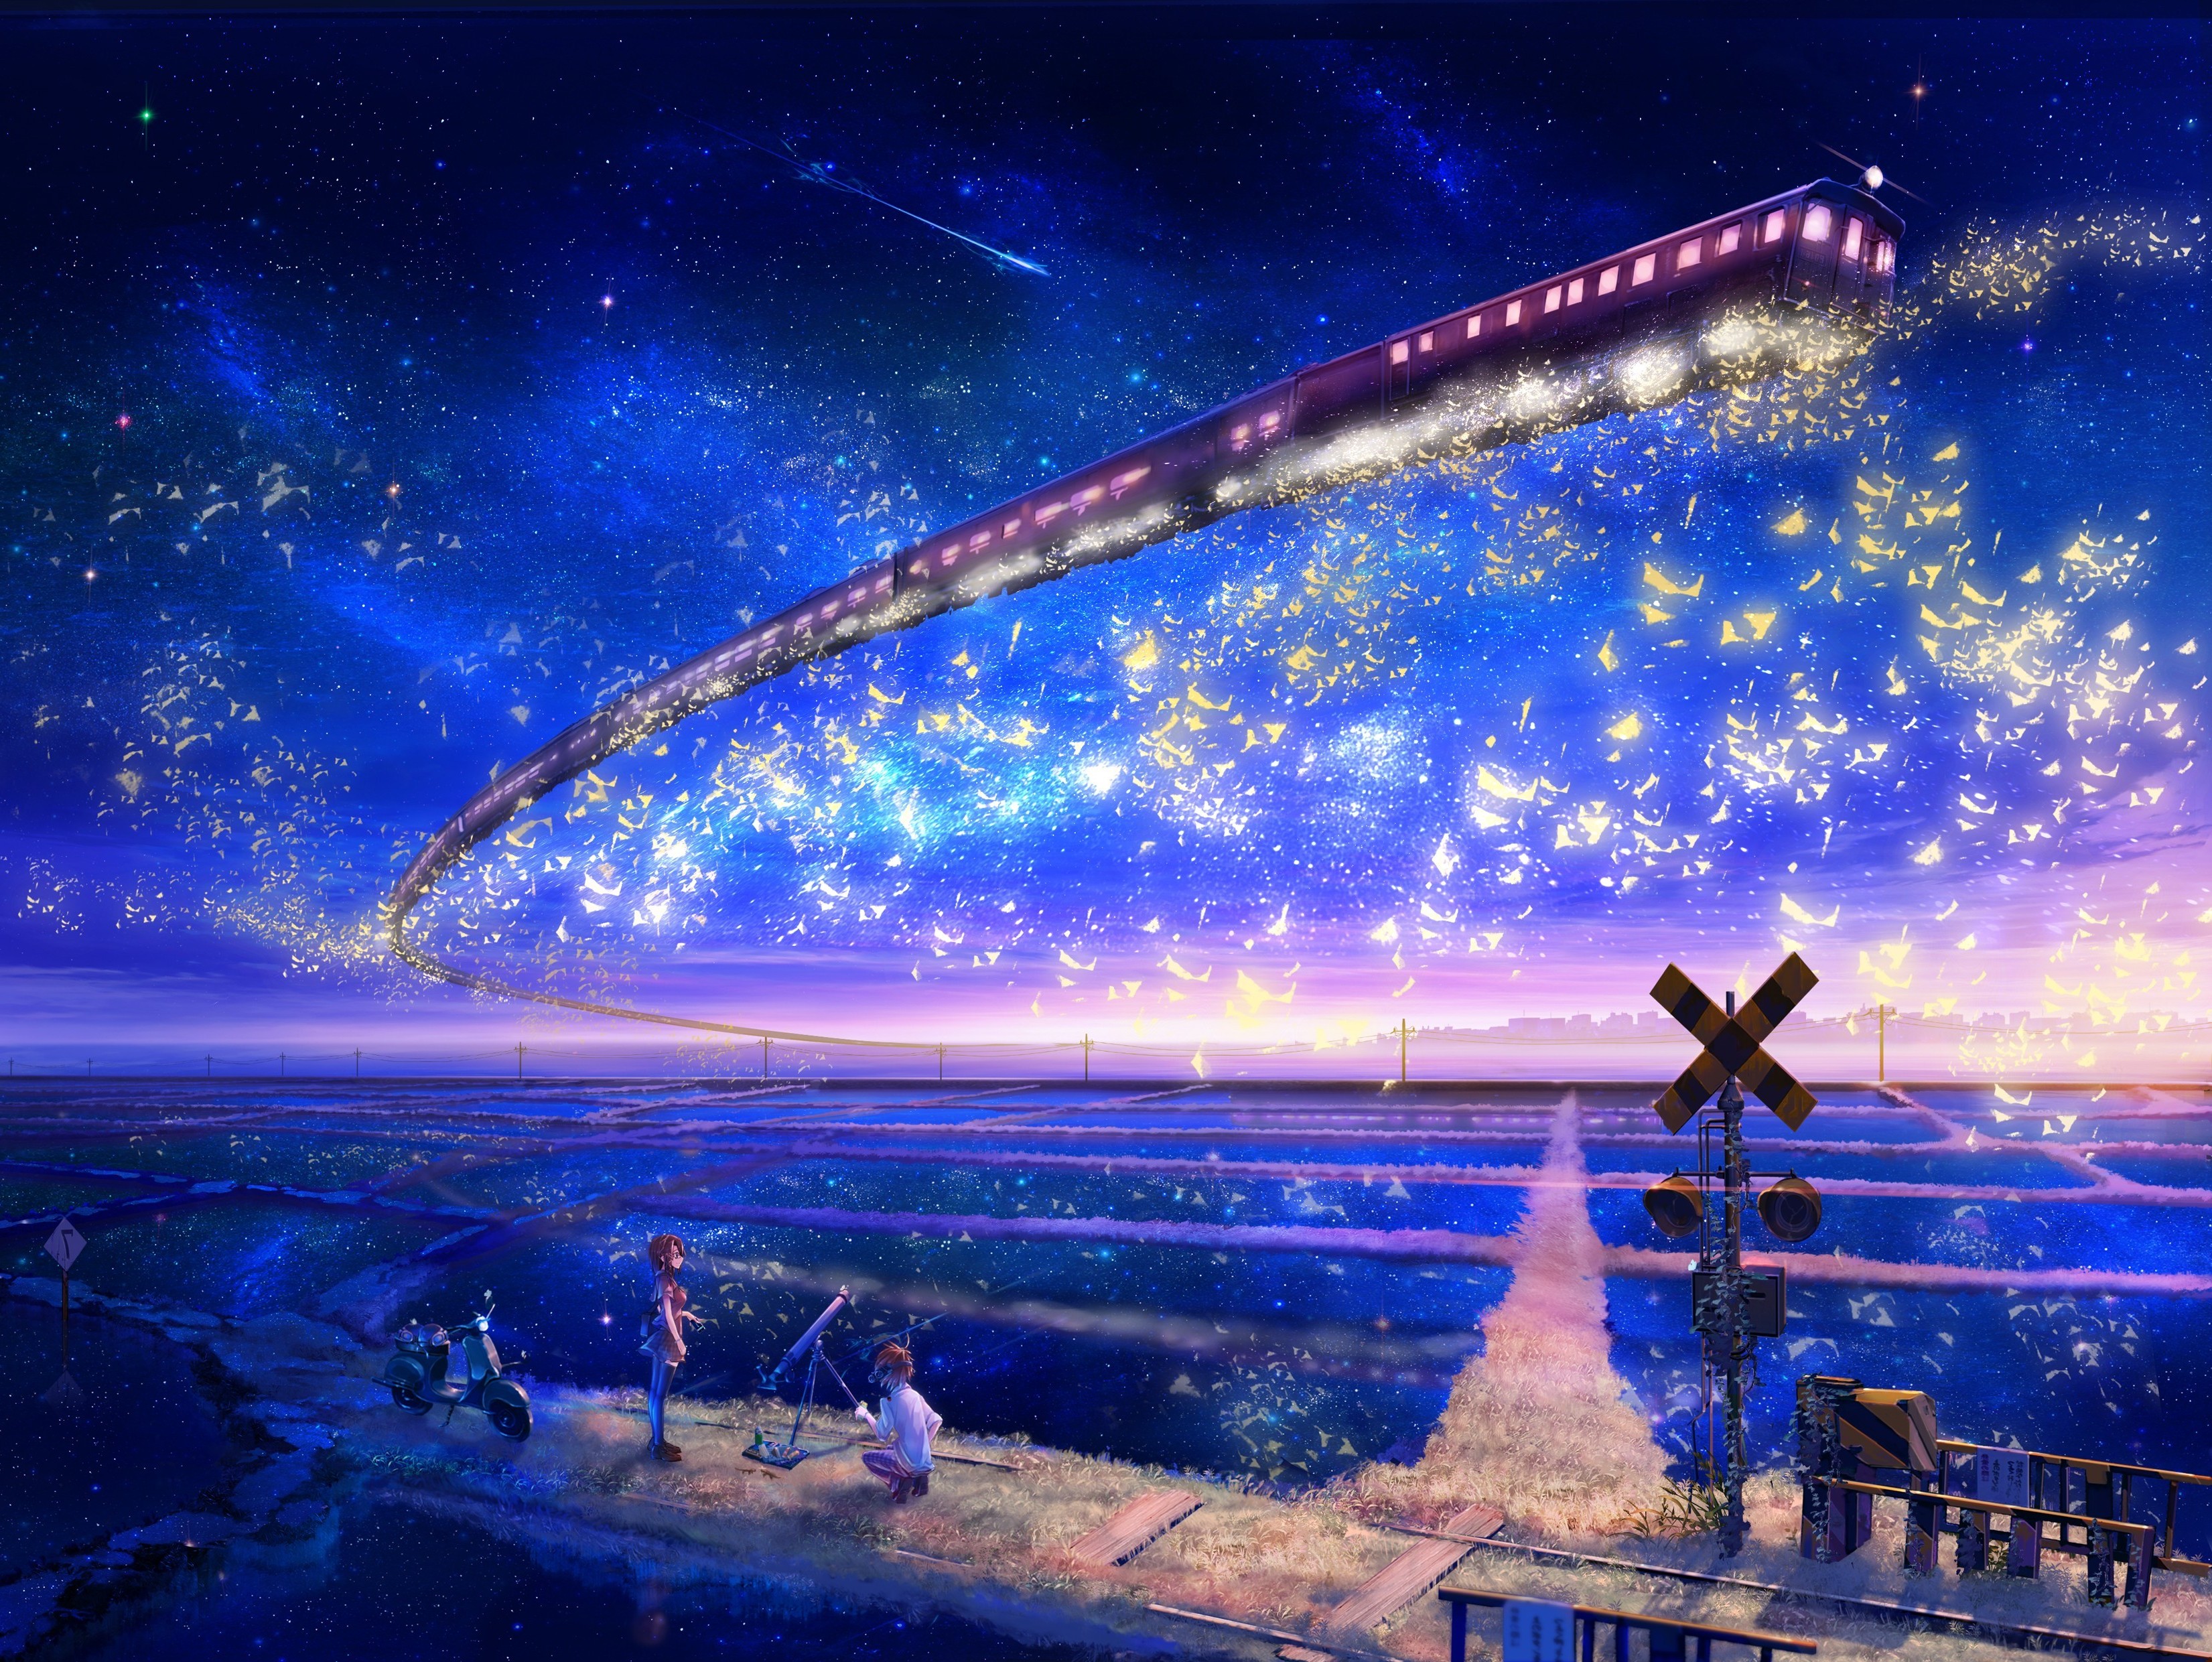 nacht anime wallpaper,himmel,atmosphäre,cg kunstwerk,platz,horizont